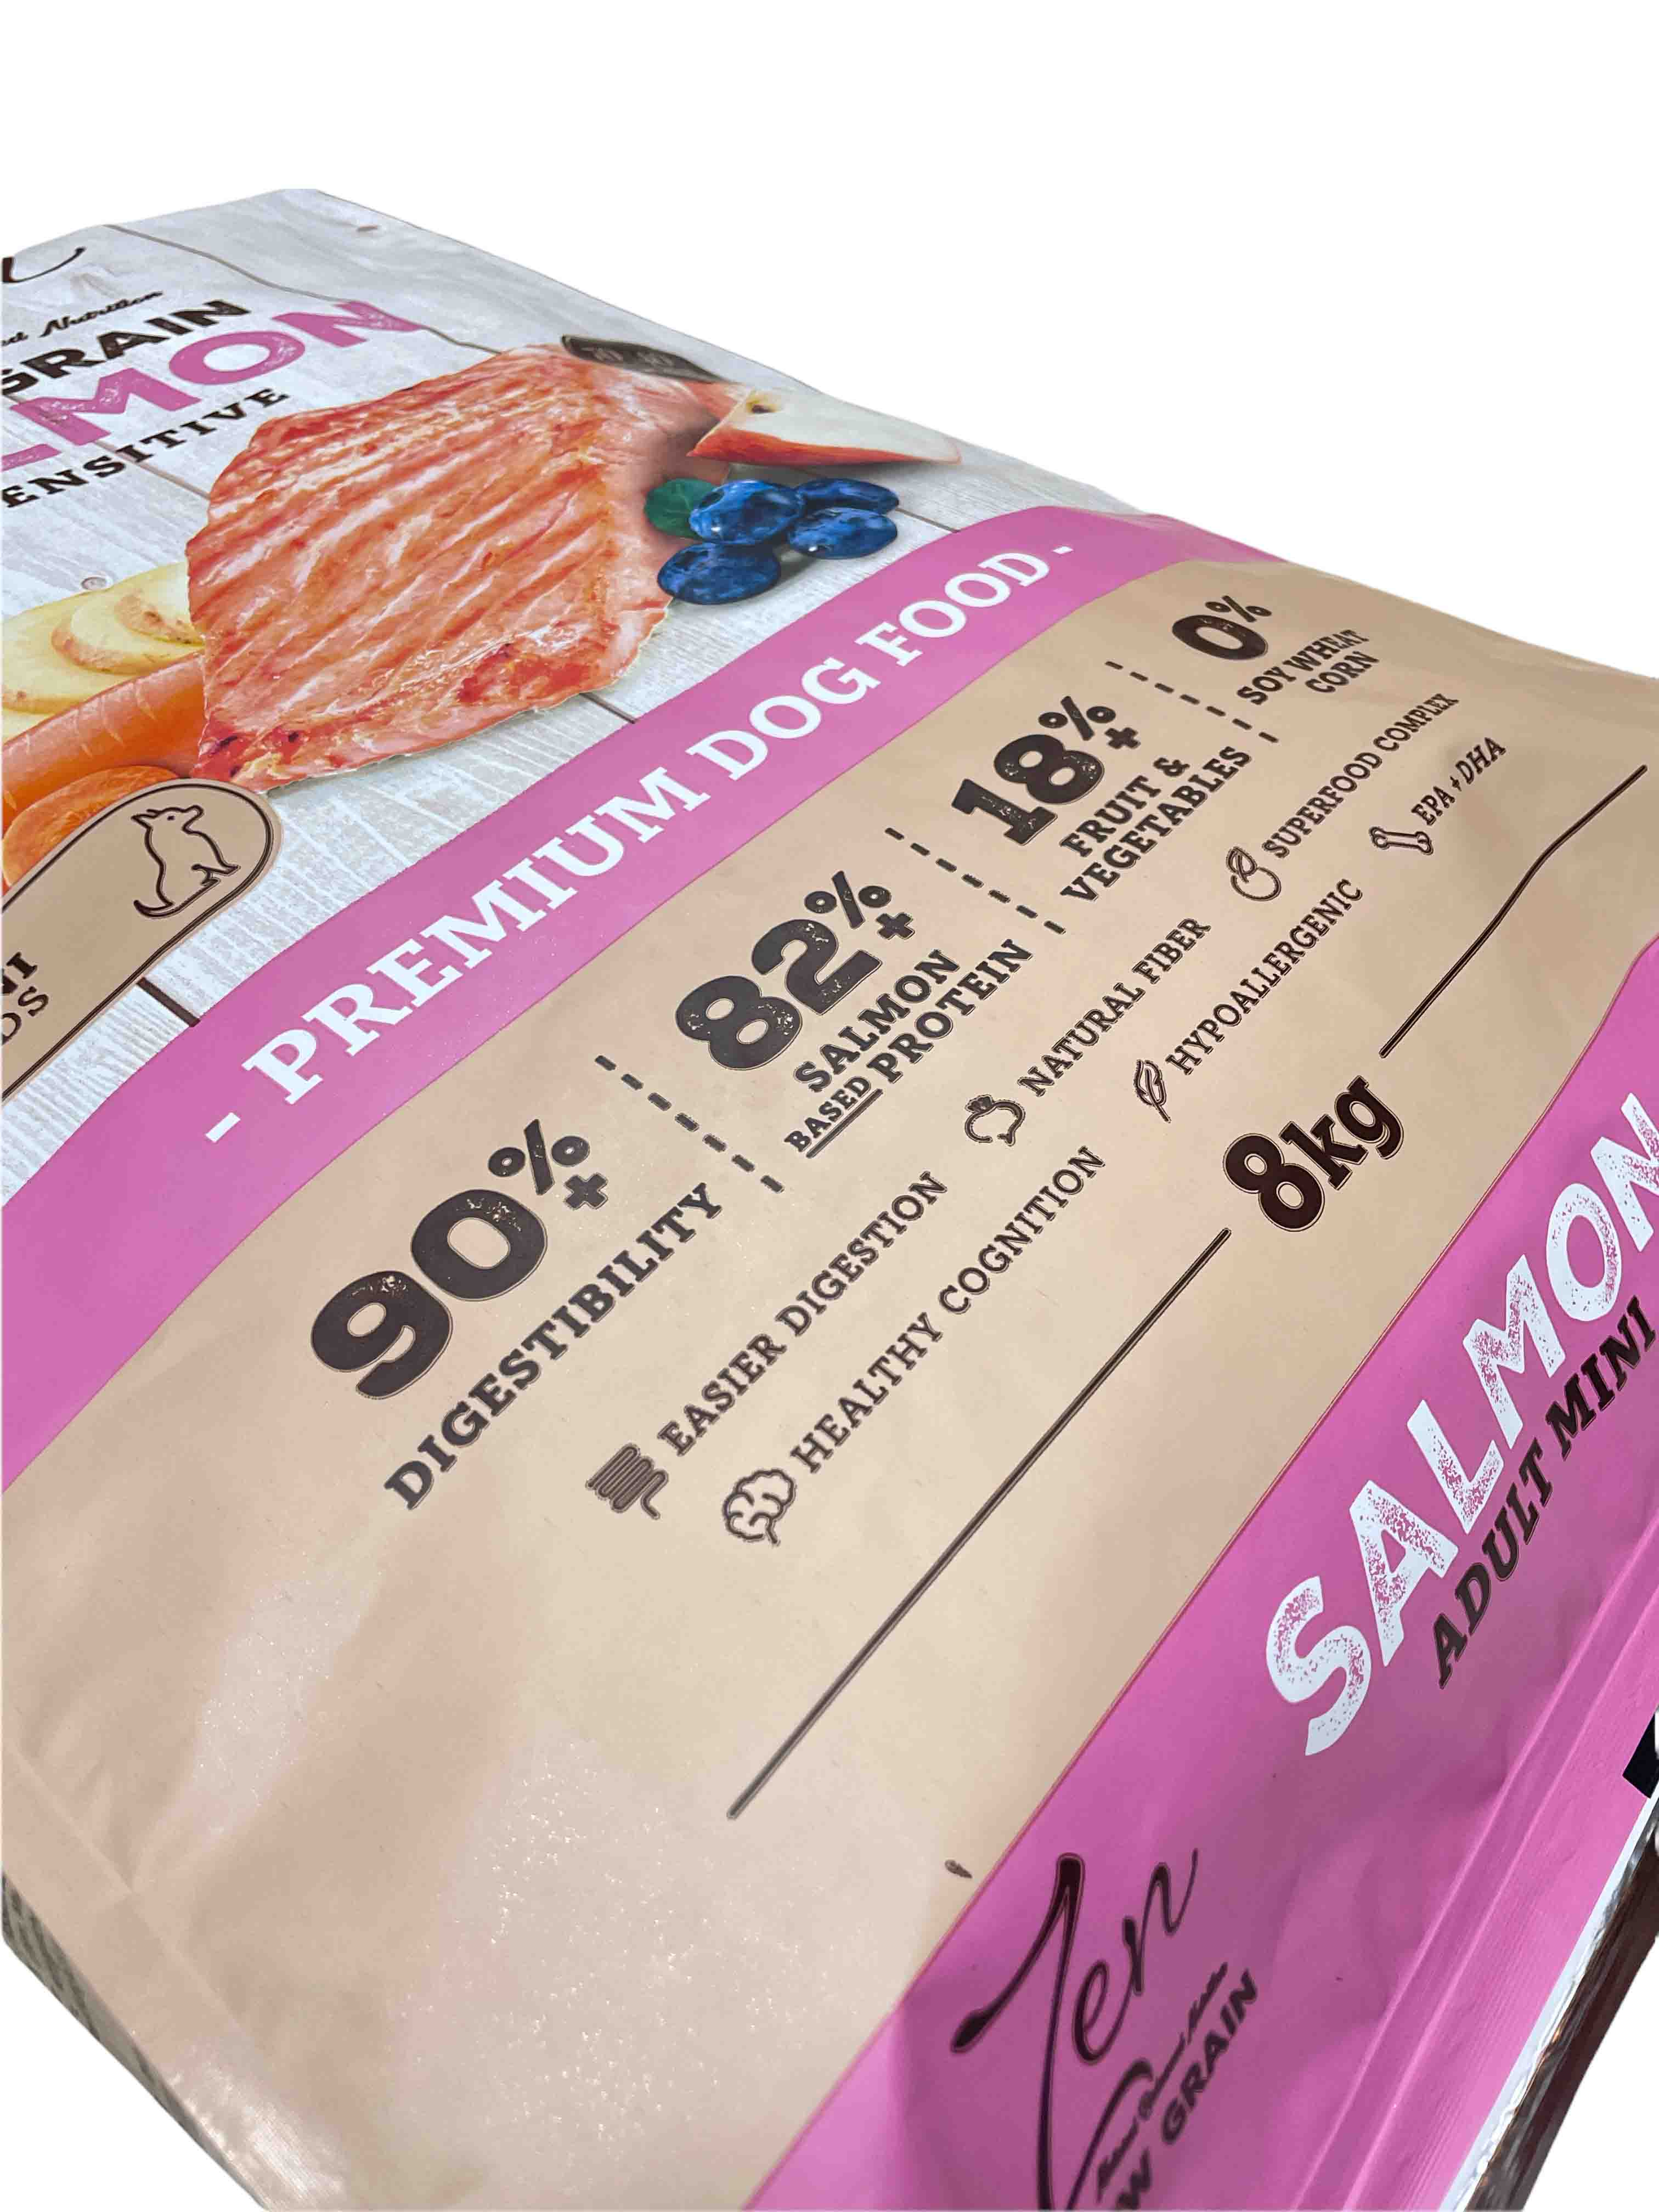 COMPOSICIÓN: Carne fresca de salmón (40 %), harina de salmón (25 %), patata (20 %), aceite de pollo, arroz, pulpa de remolacha, harina de pescado, levaduras, hidrolizado de salmón (5 %), aceite de pescado, inulina (fuente de FOS 0,25 %), cloruro sódico, manano-oligo sacáridos (MOS 250 mg/Kg), extractos de cítricos, extracto de yucca, cloruro de potasio, fosfato monocálcico, jengibre.